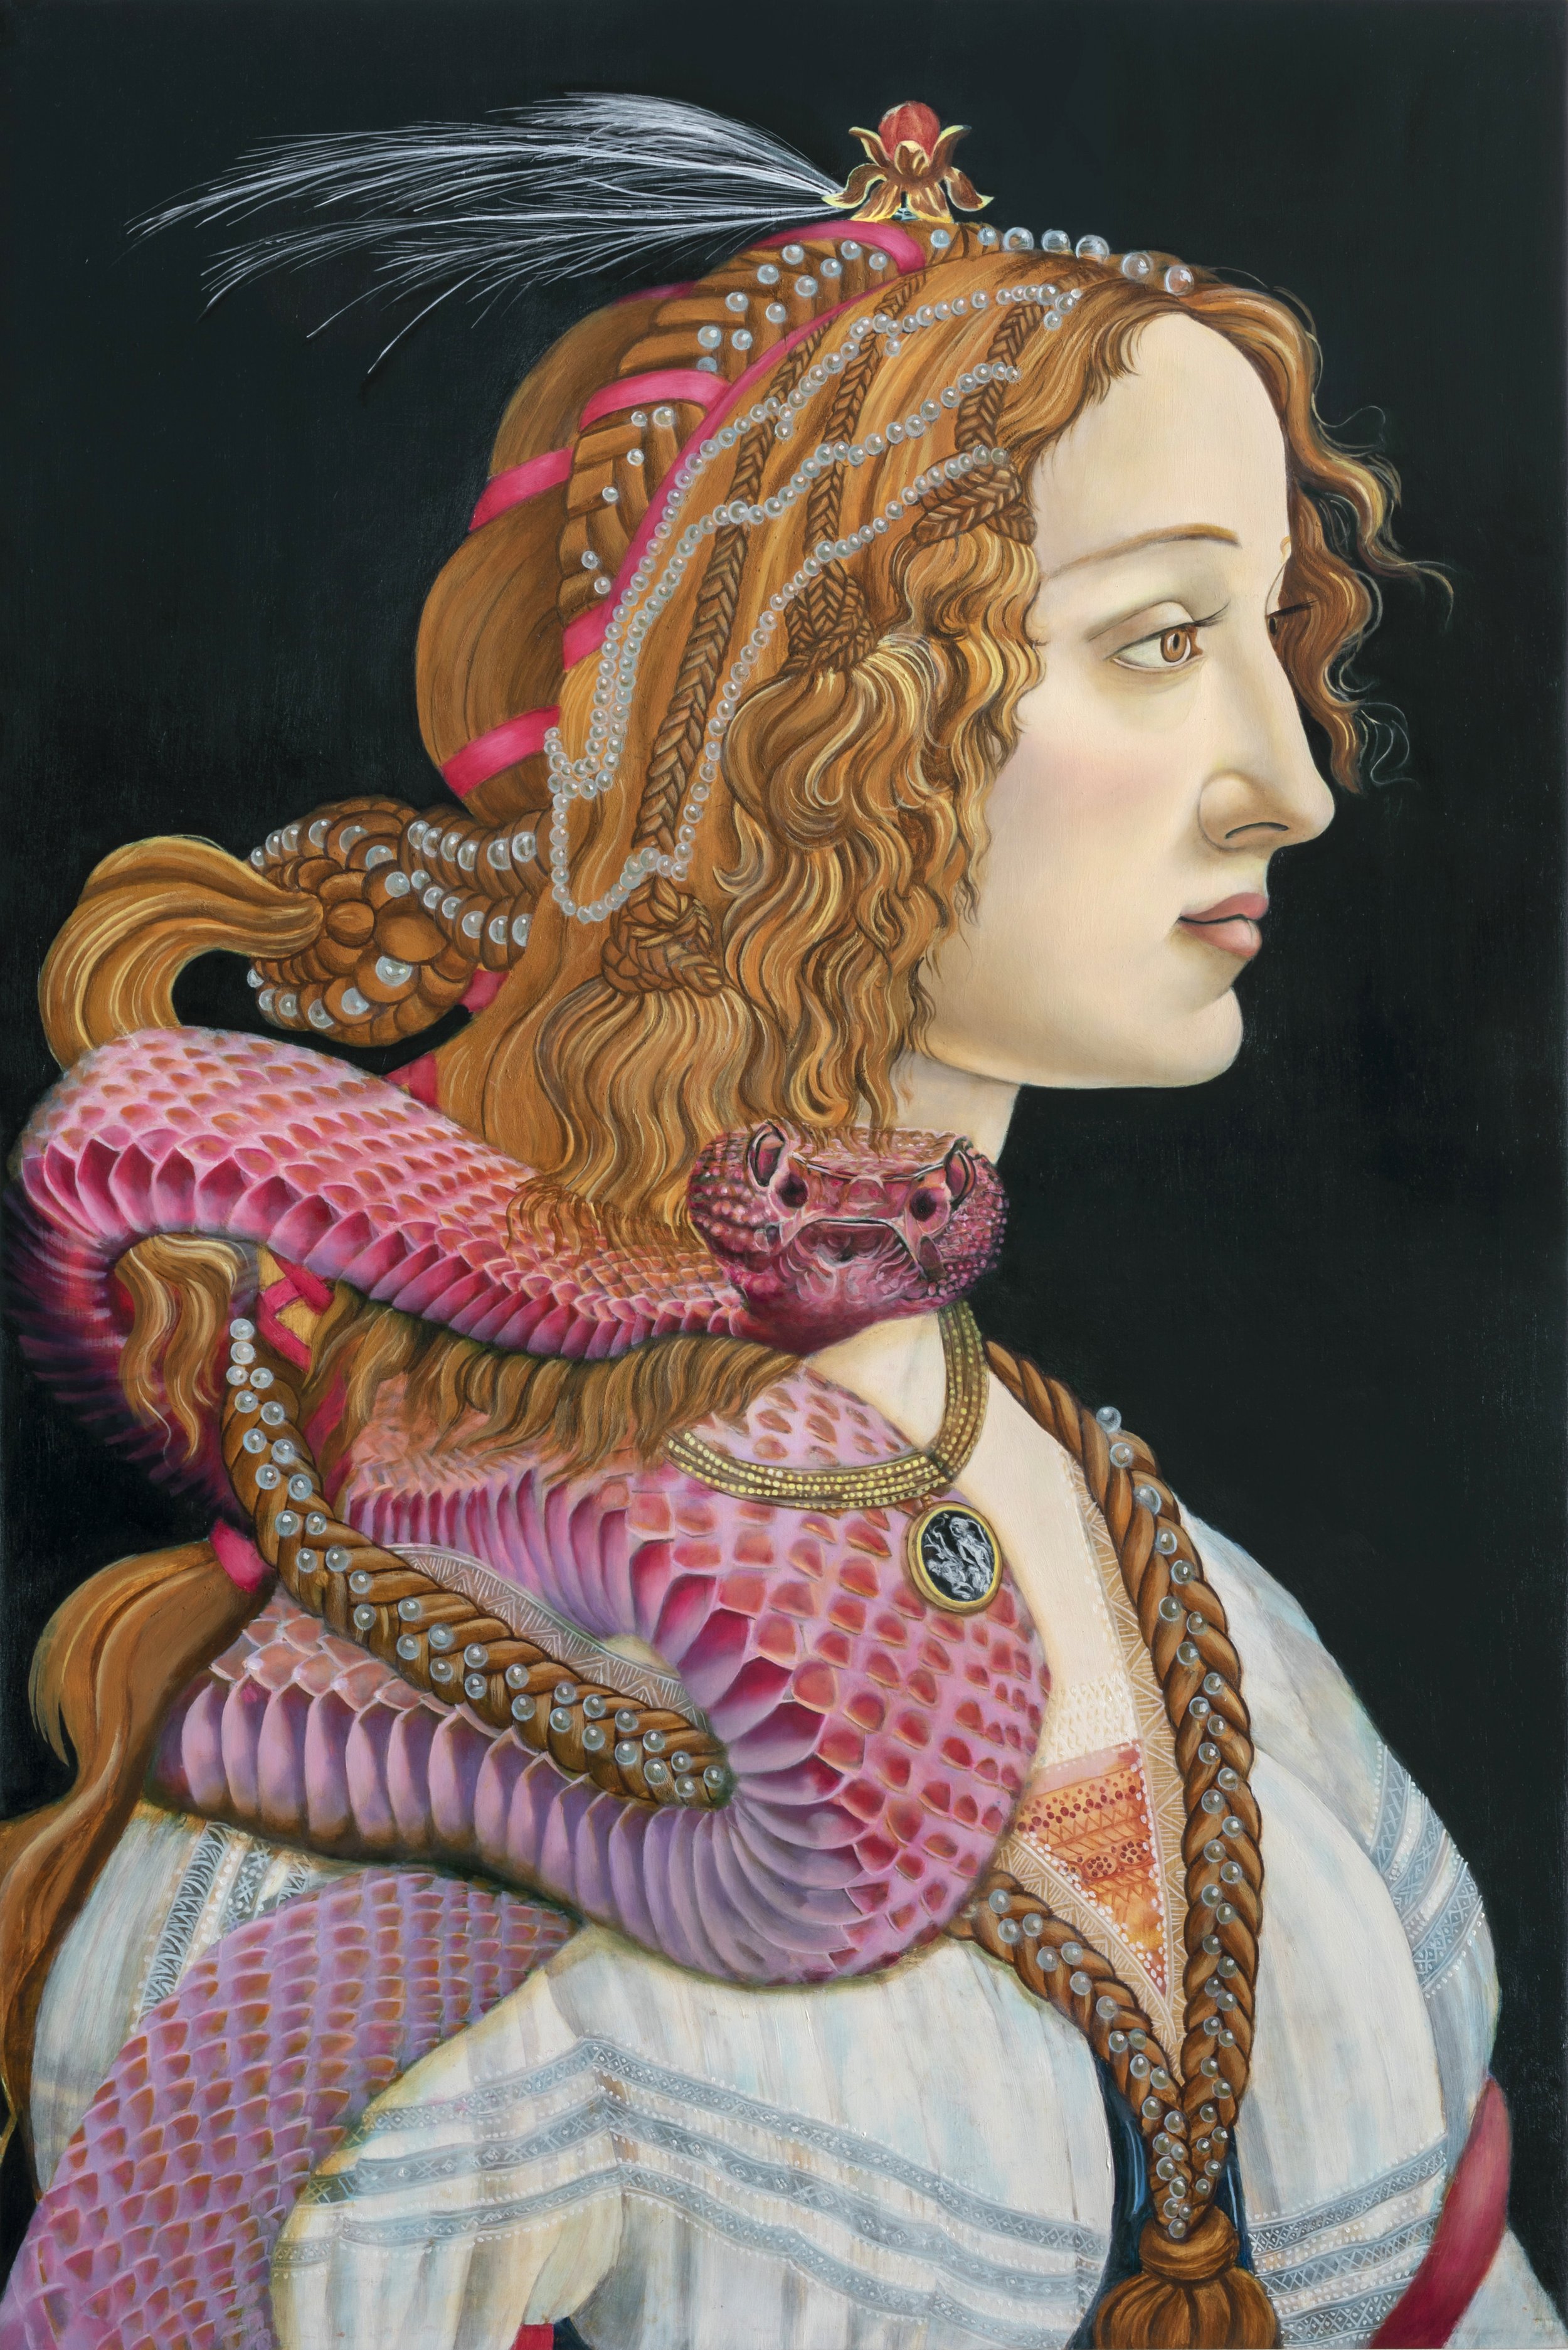     Braided Snake and Pearls Betray Simonetta’s Headache &nbsp;  oil on panel  17 x 26 inches  2023 